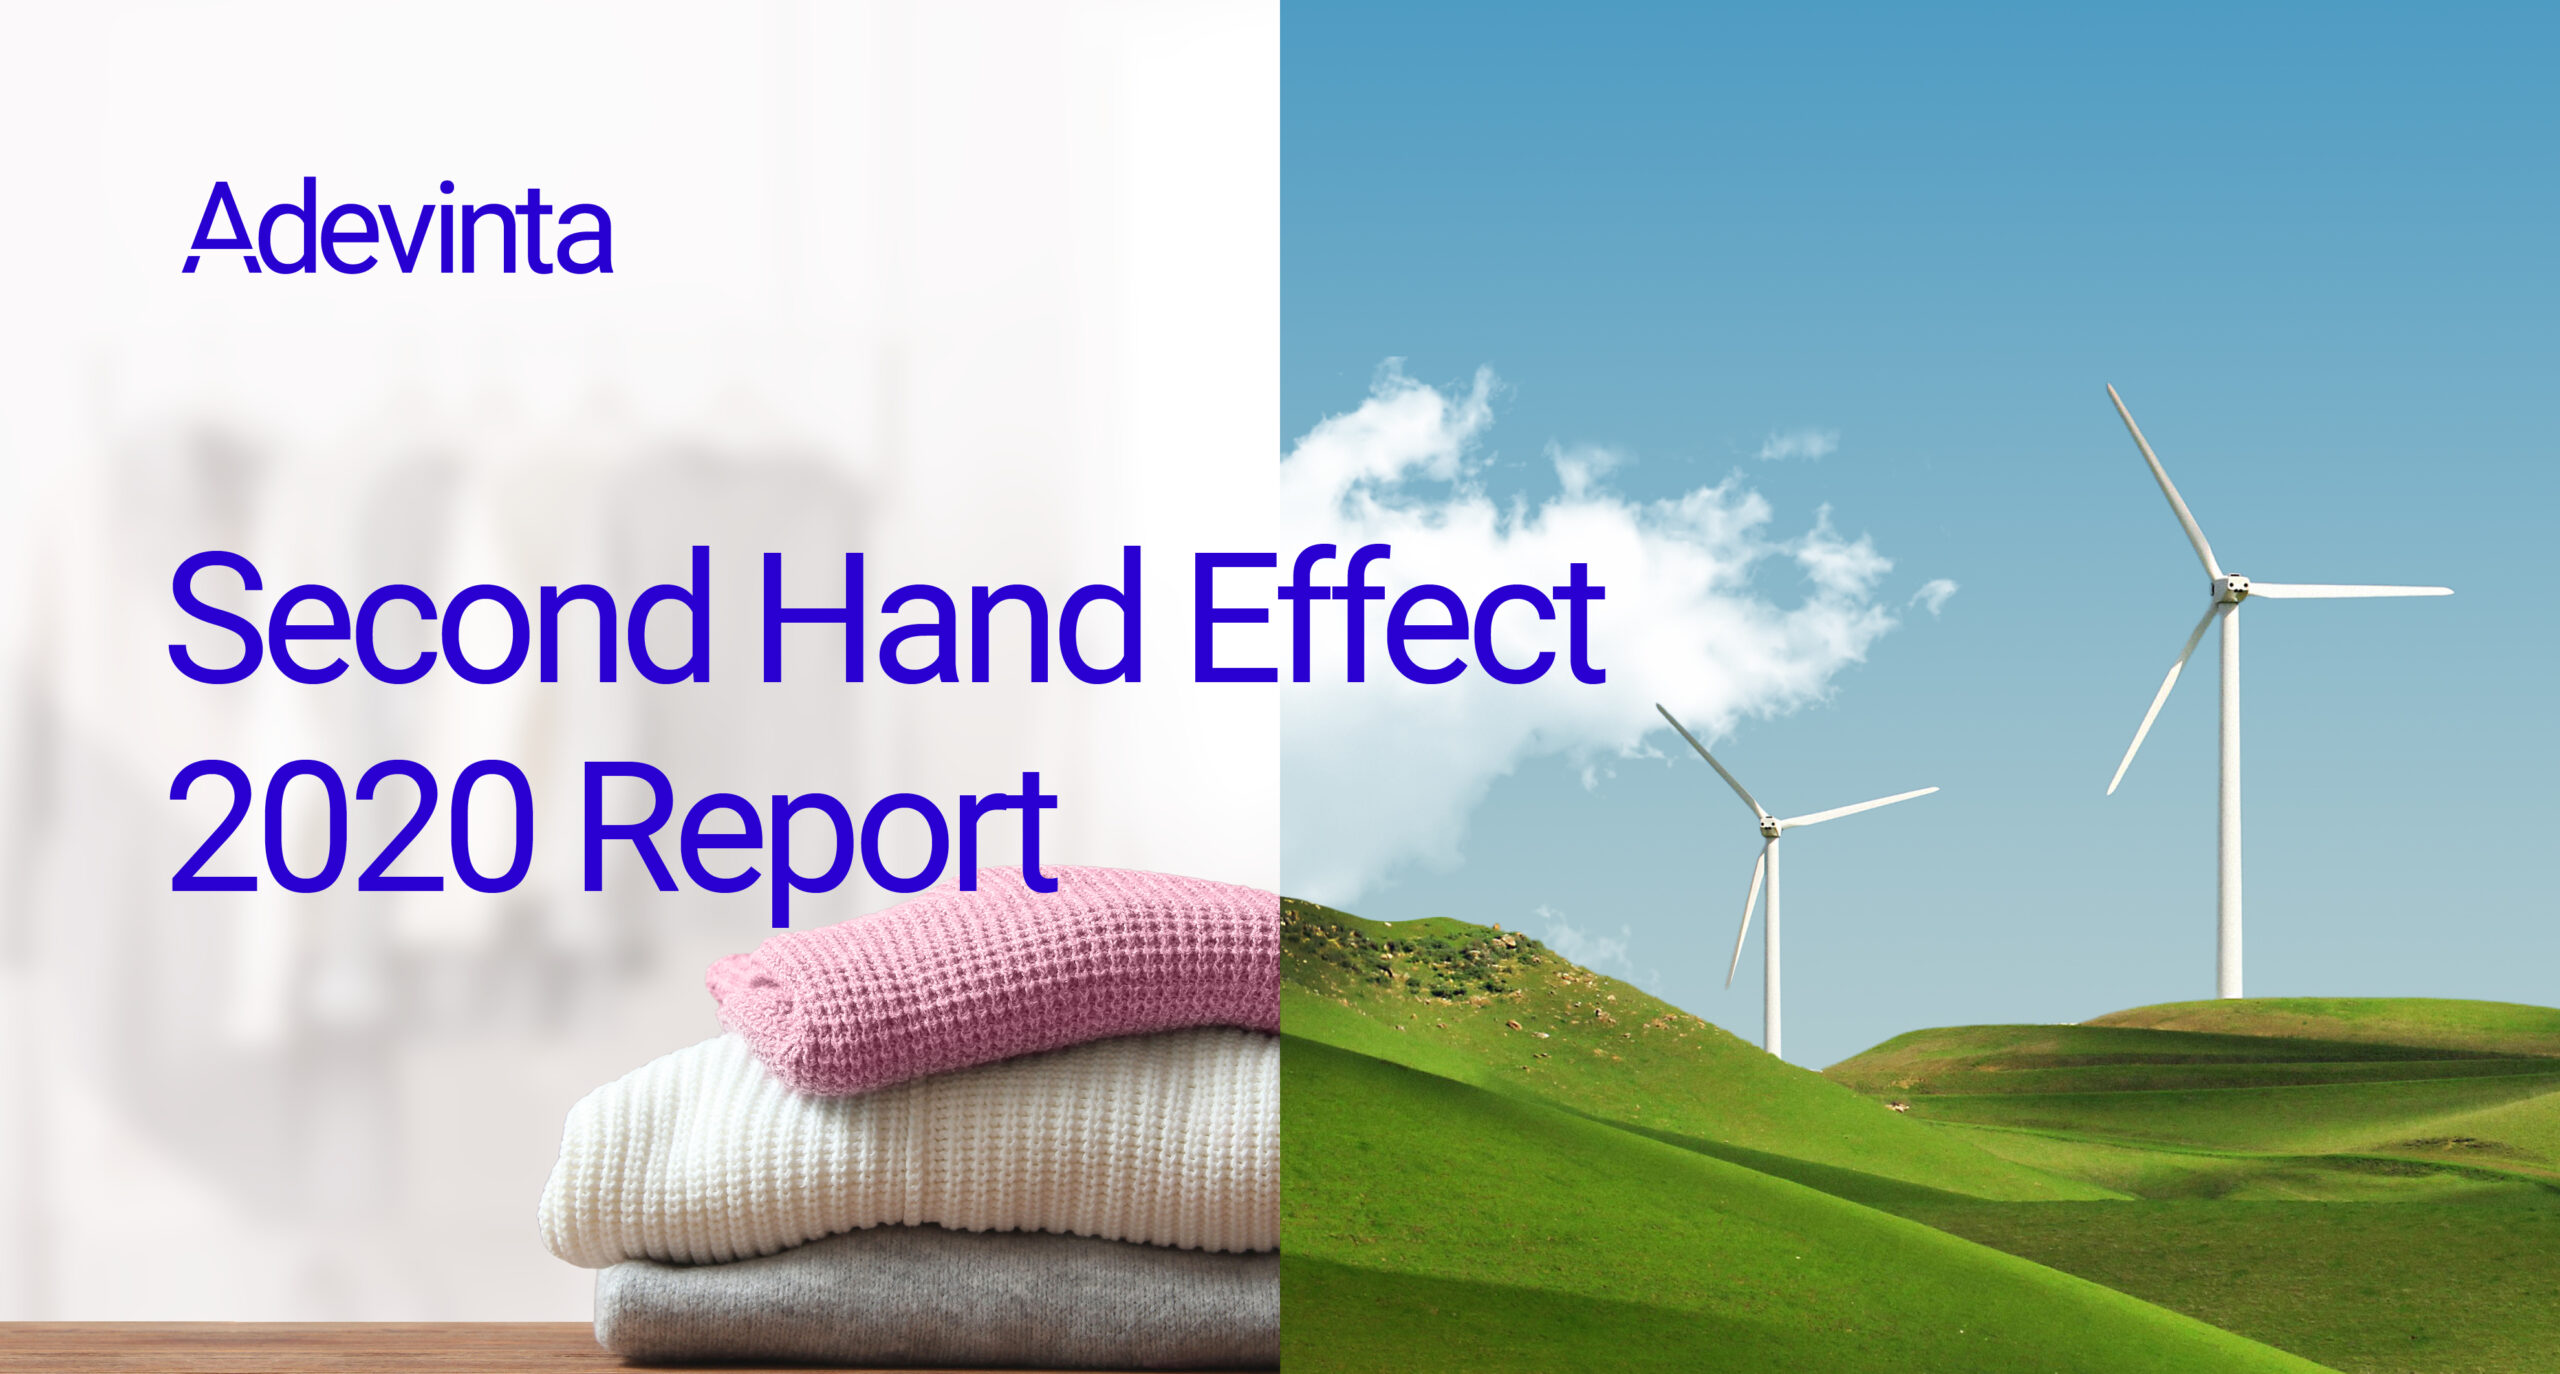 Second-hand trade has big environmental impact according to Adevinta study  - Adevinta